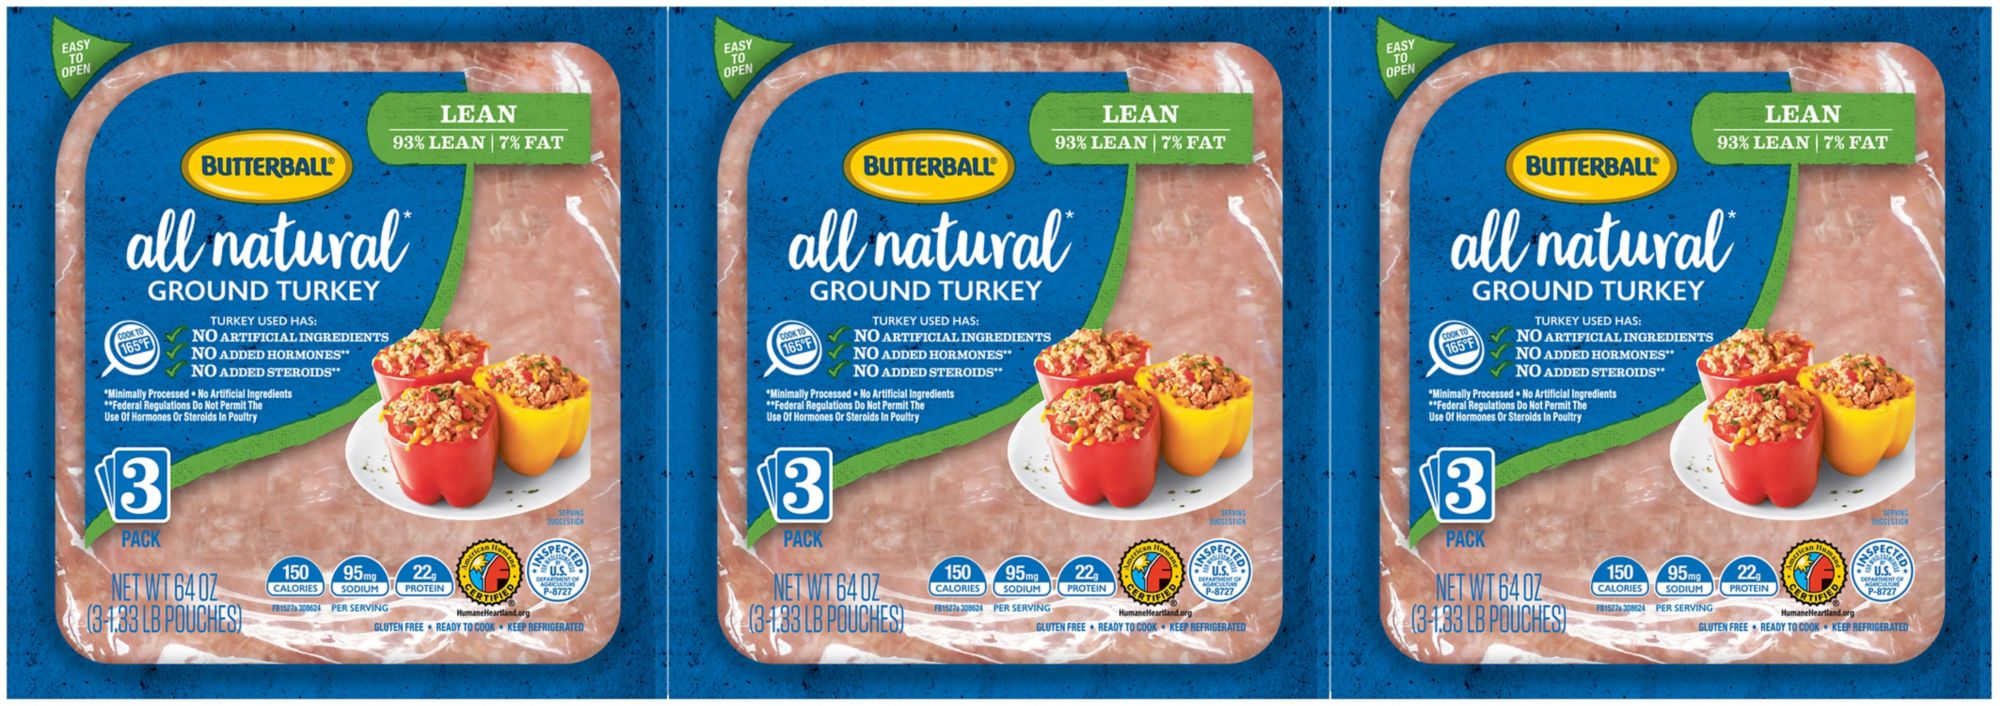 Butterball All Natural 93% Lean/7% Fat Lean Ground Turkey, 3 pk./1.33 lbs.